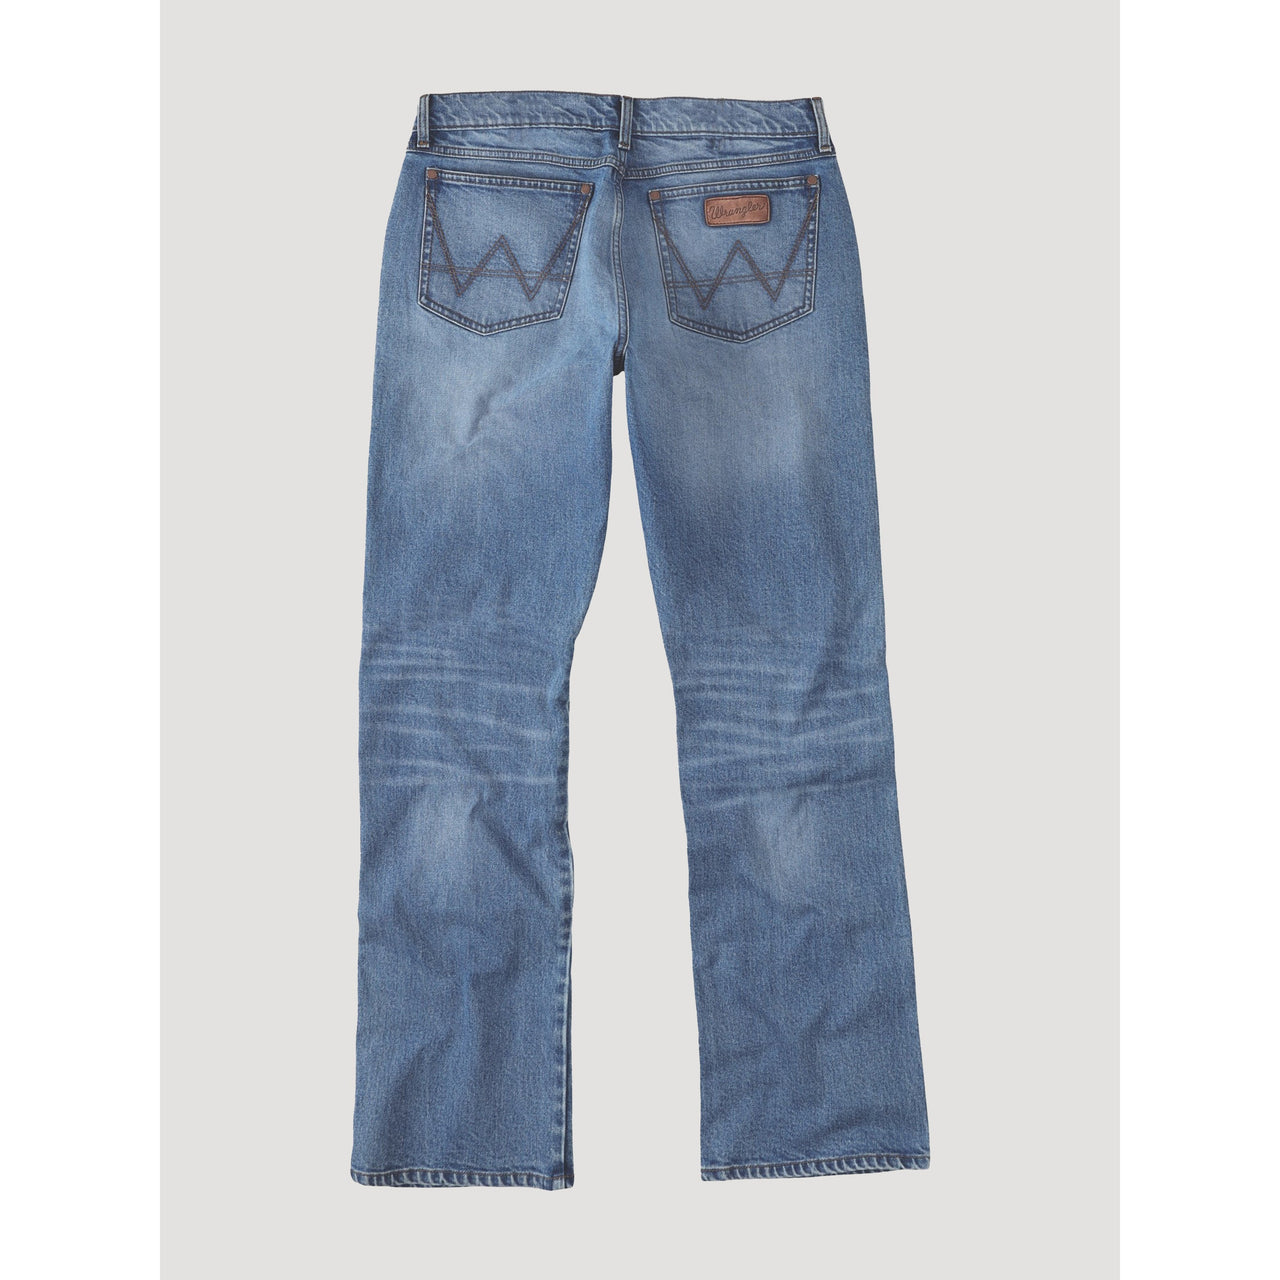 Wrangler Boys Retro Retro Relaxed Boot Cut Jeans (8-20) - Arlyn